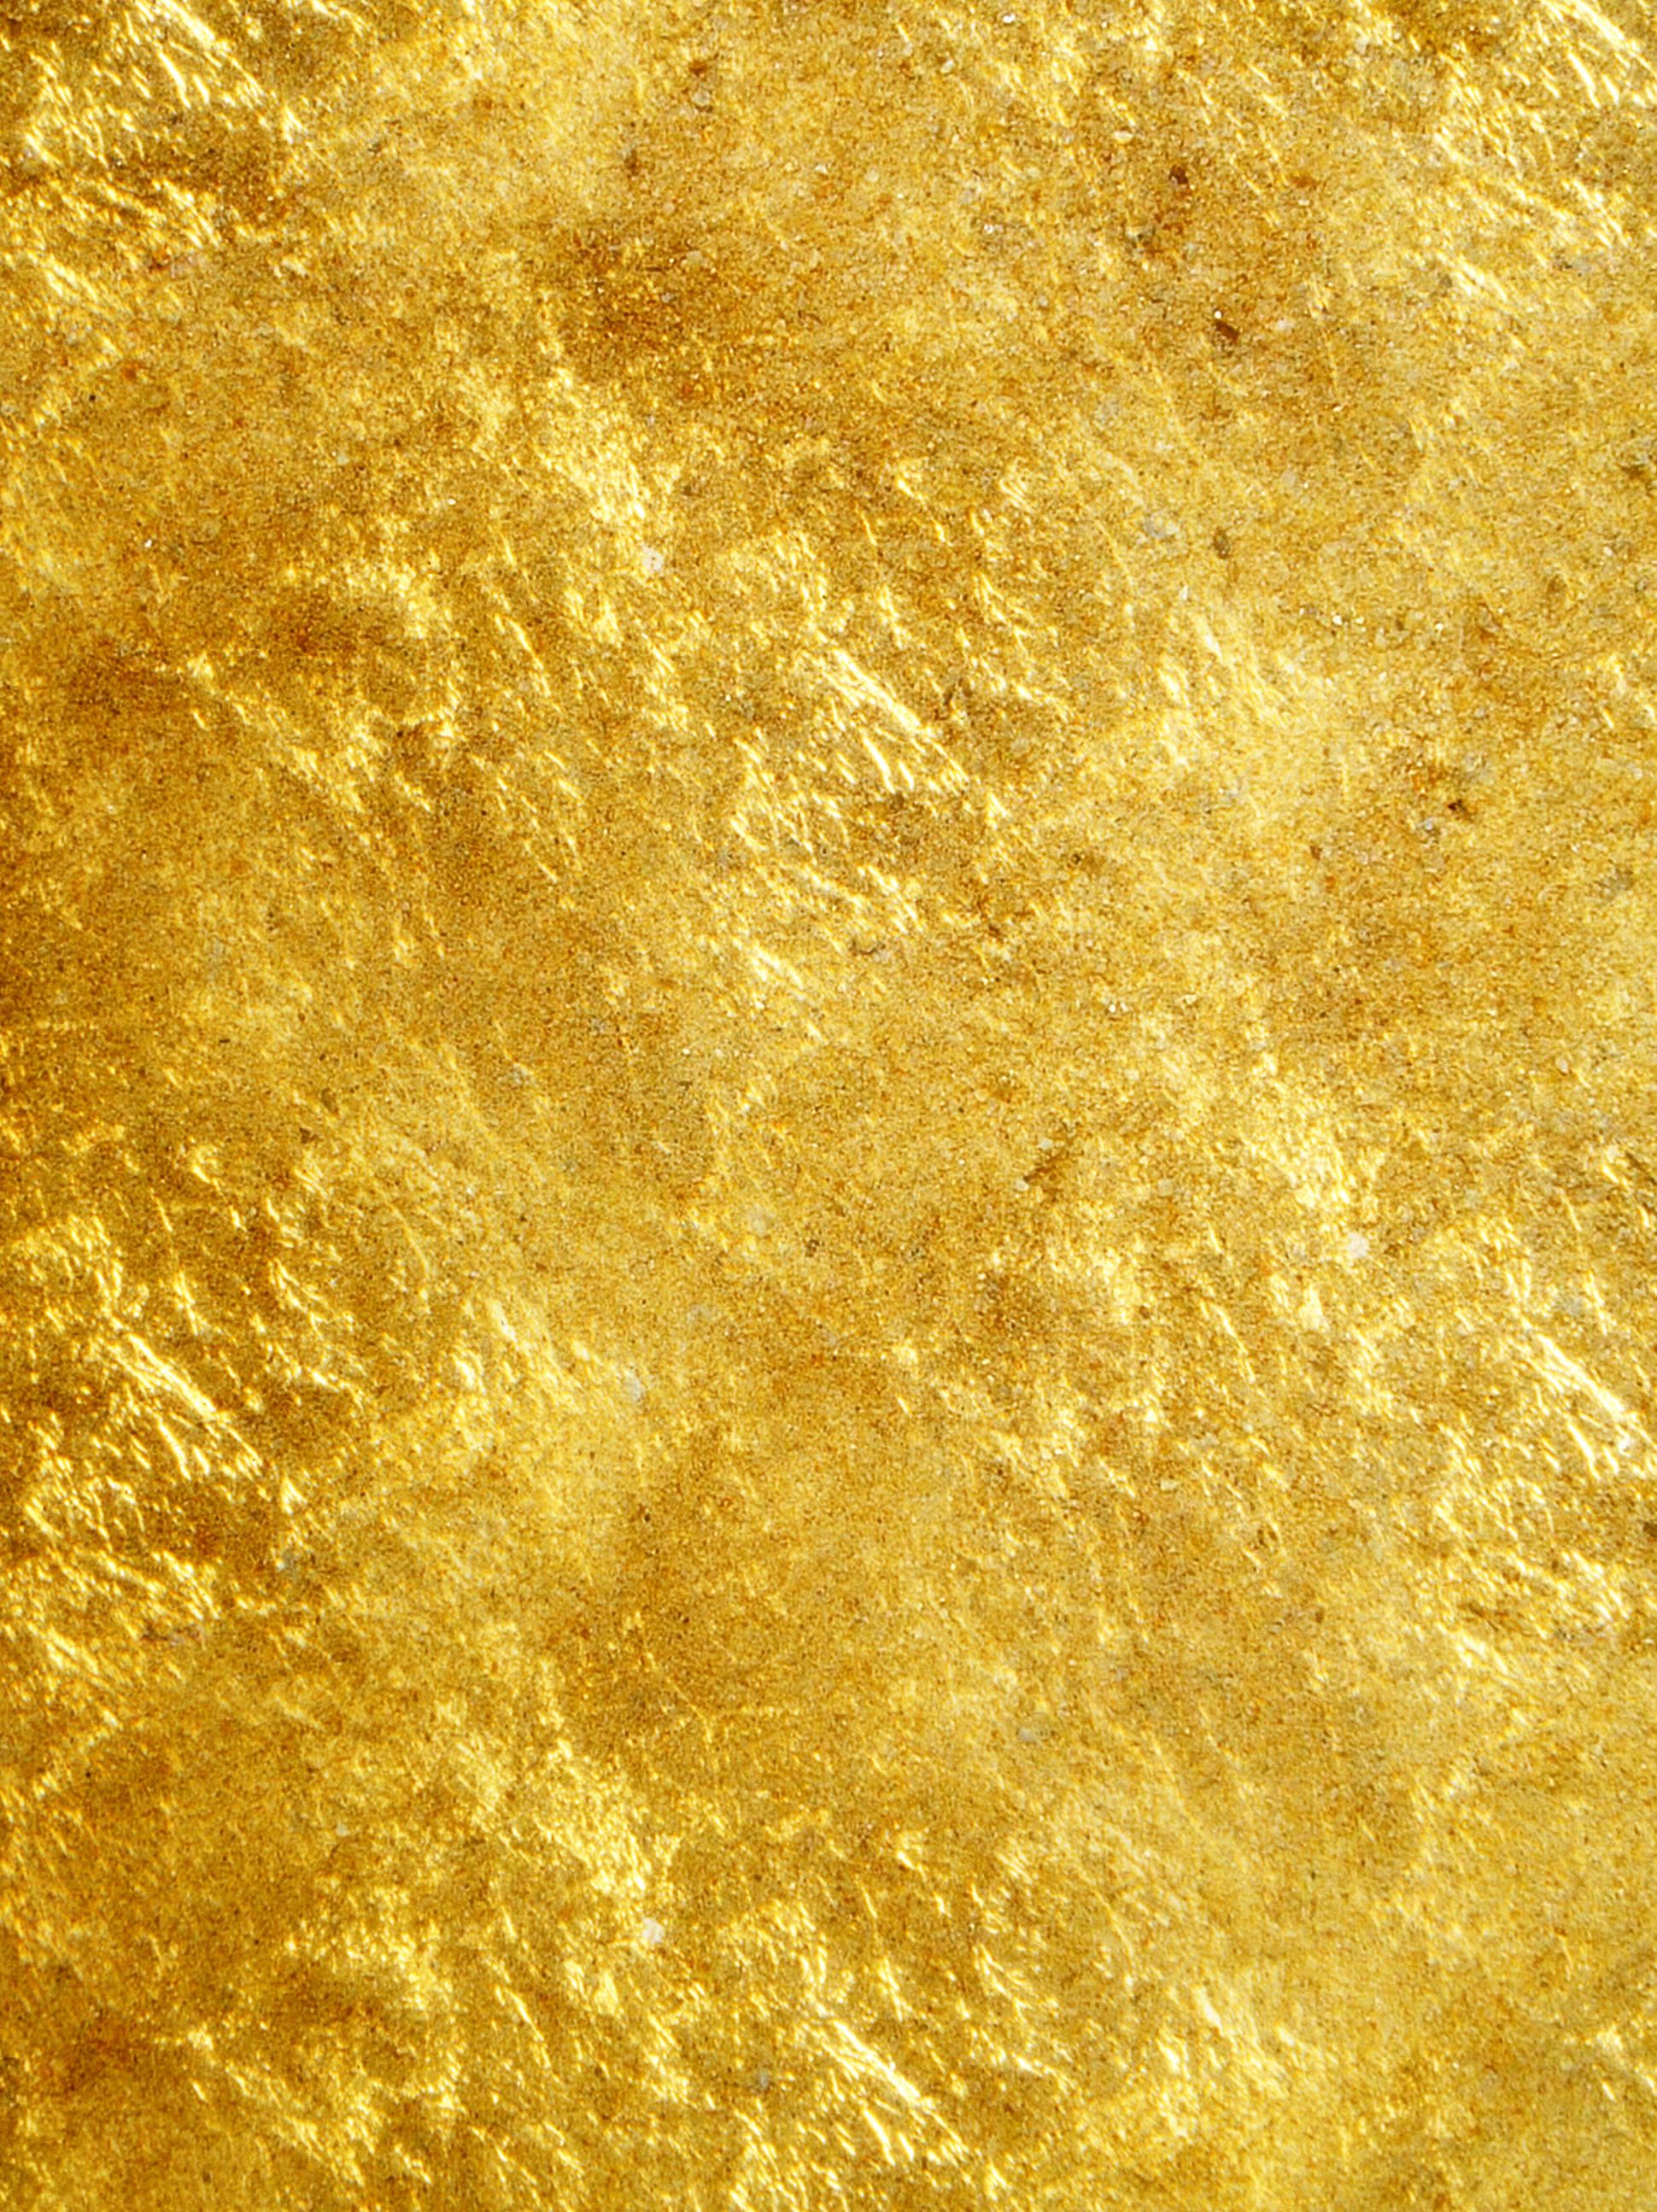 Free download Gold Background Image The Art Mad Wallpaper [1940x2590] for your Desktop, Mobile & Tablet. Explore Gold Wallpaper Image. Colored Wallpaper Image, Black and Gold Wallpaper Designs, Gold